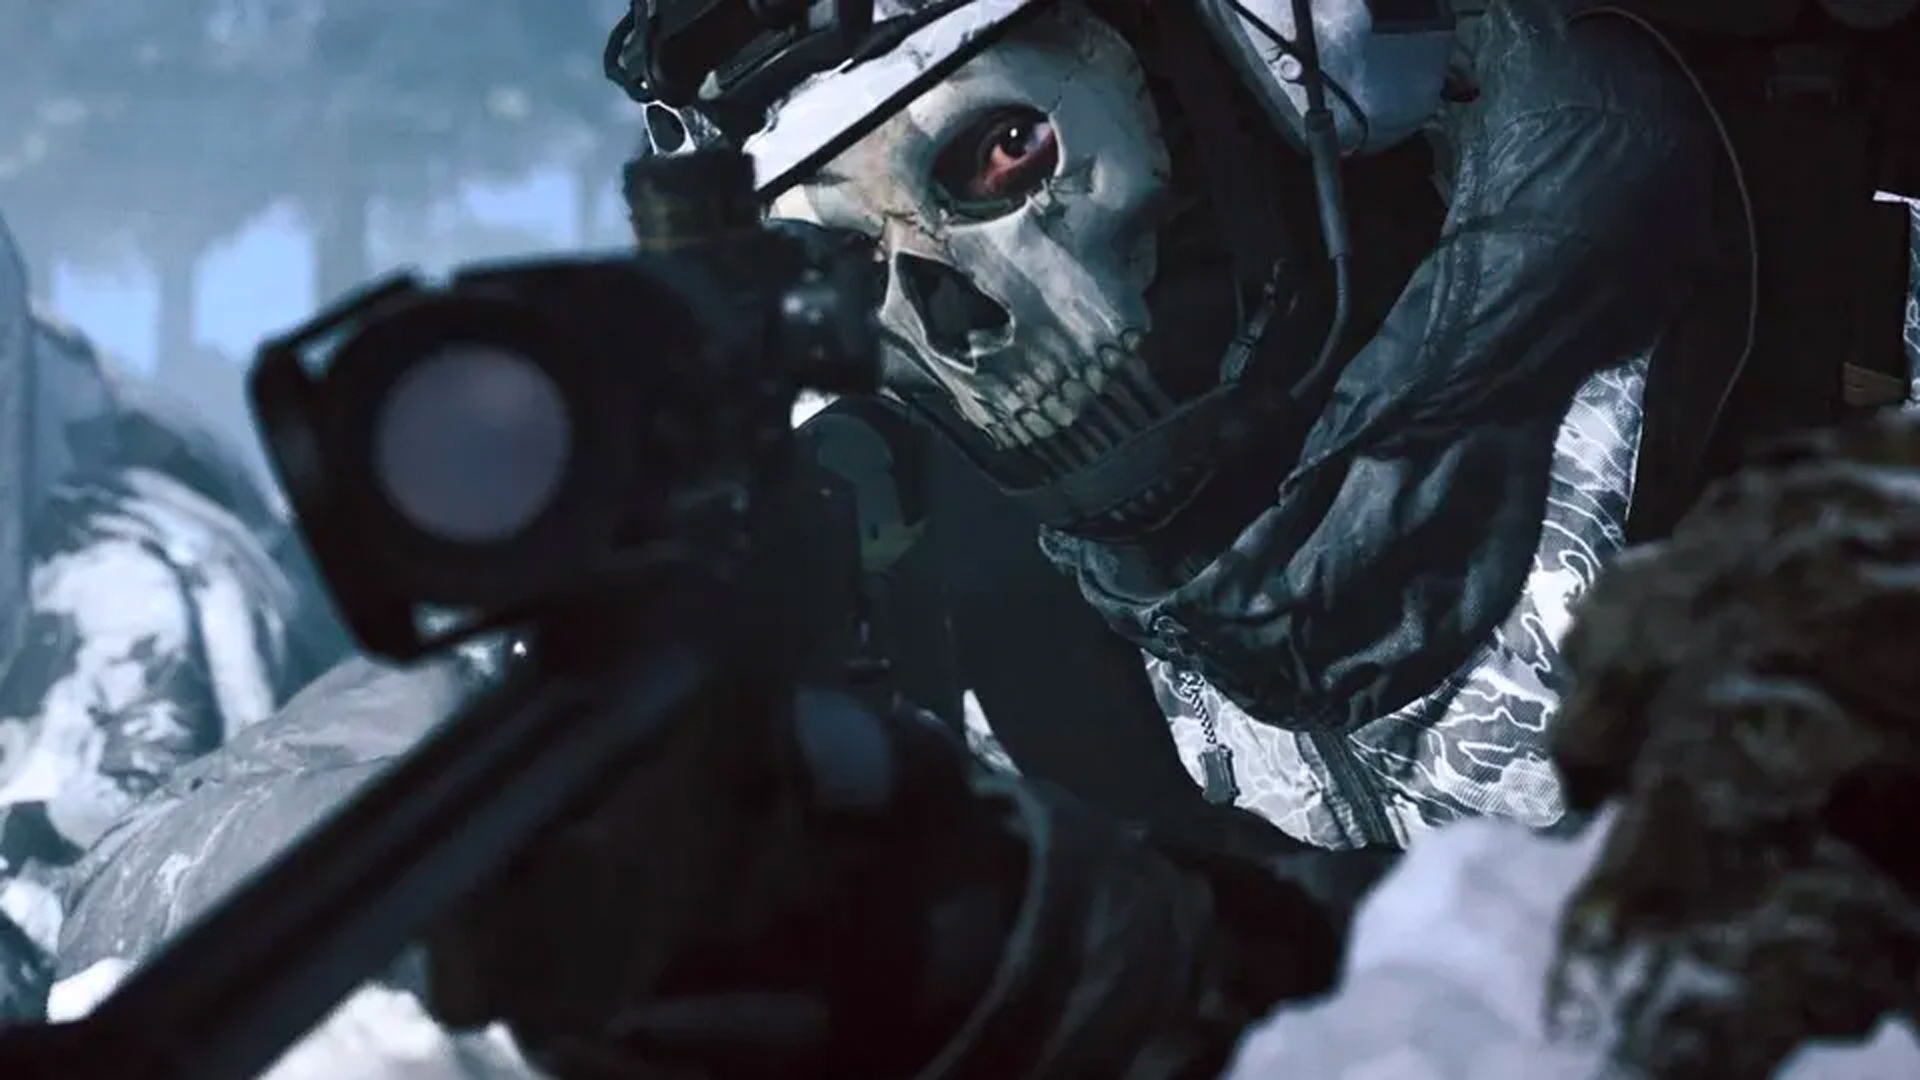 Call of Duty: Modern Warfare 3 breaks post-pandemic record, despite backlash